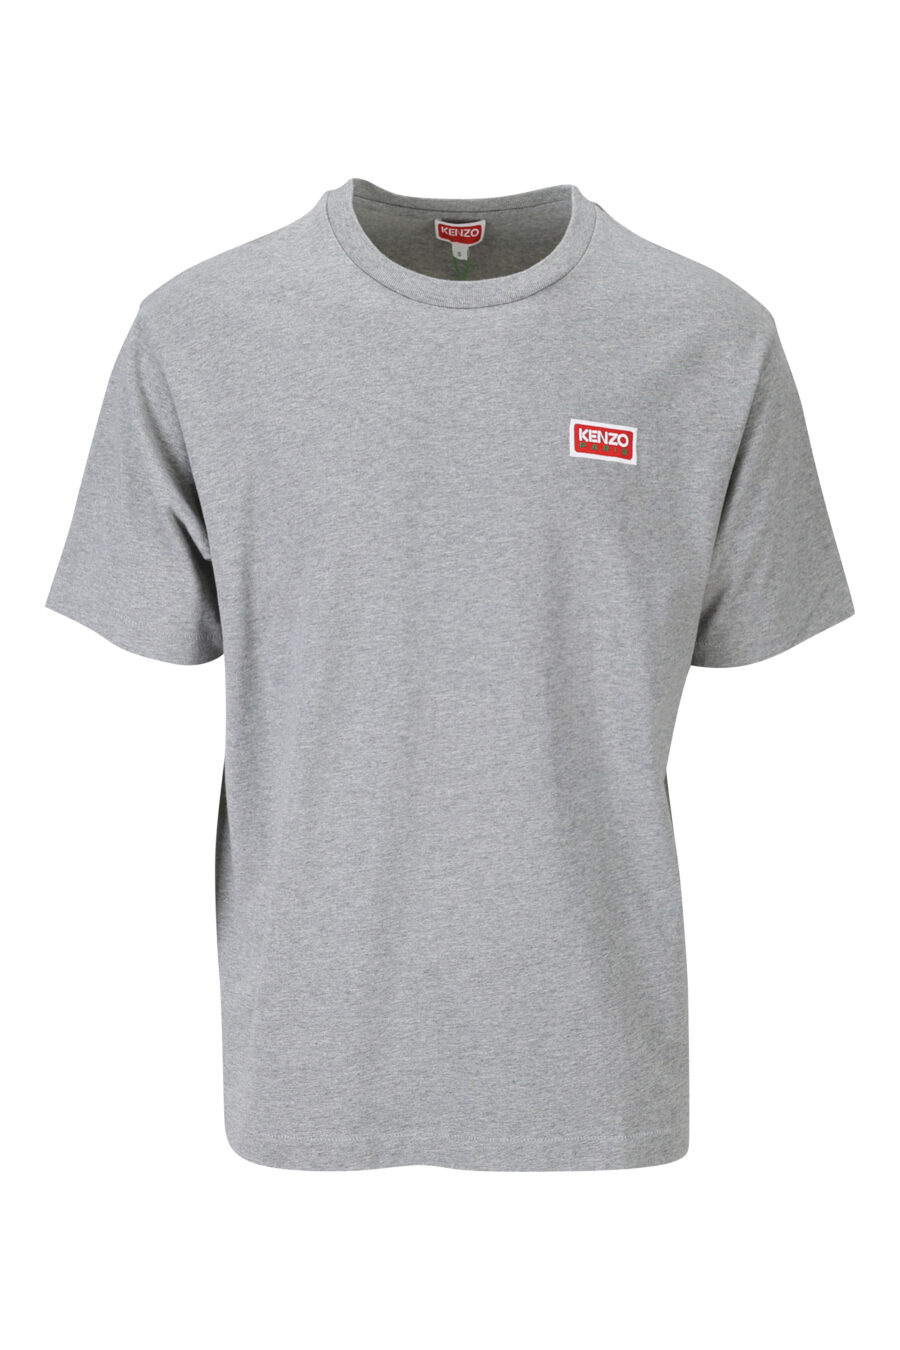 Grey T-shirt with minilogo "kenzo paris" - 3612230543188